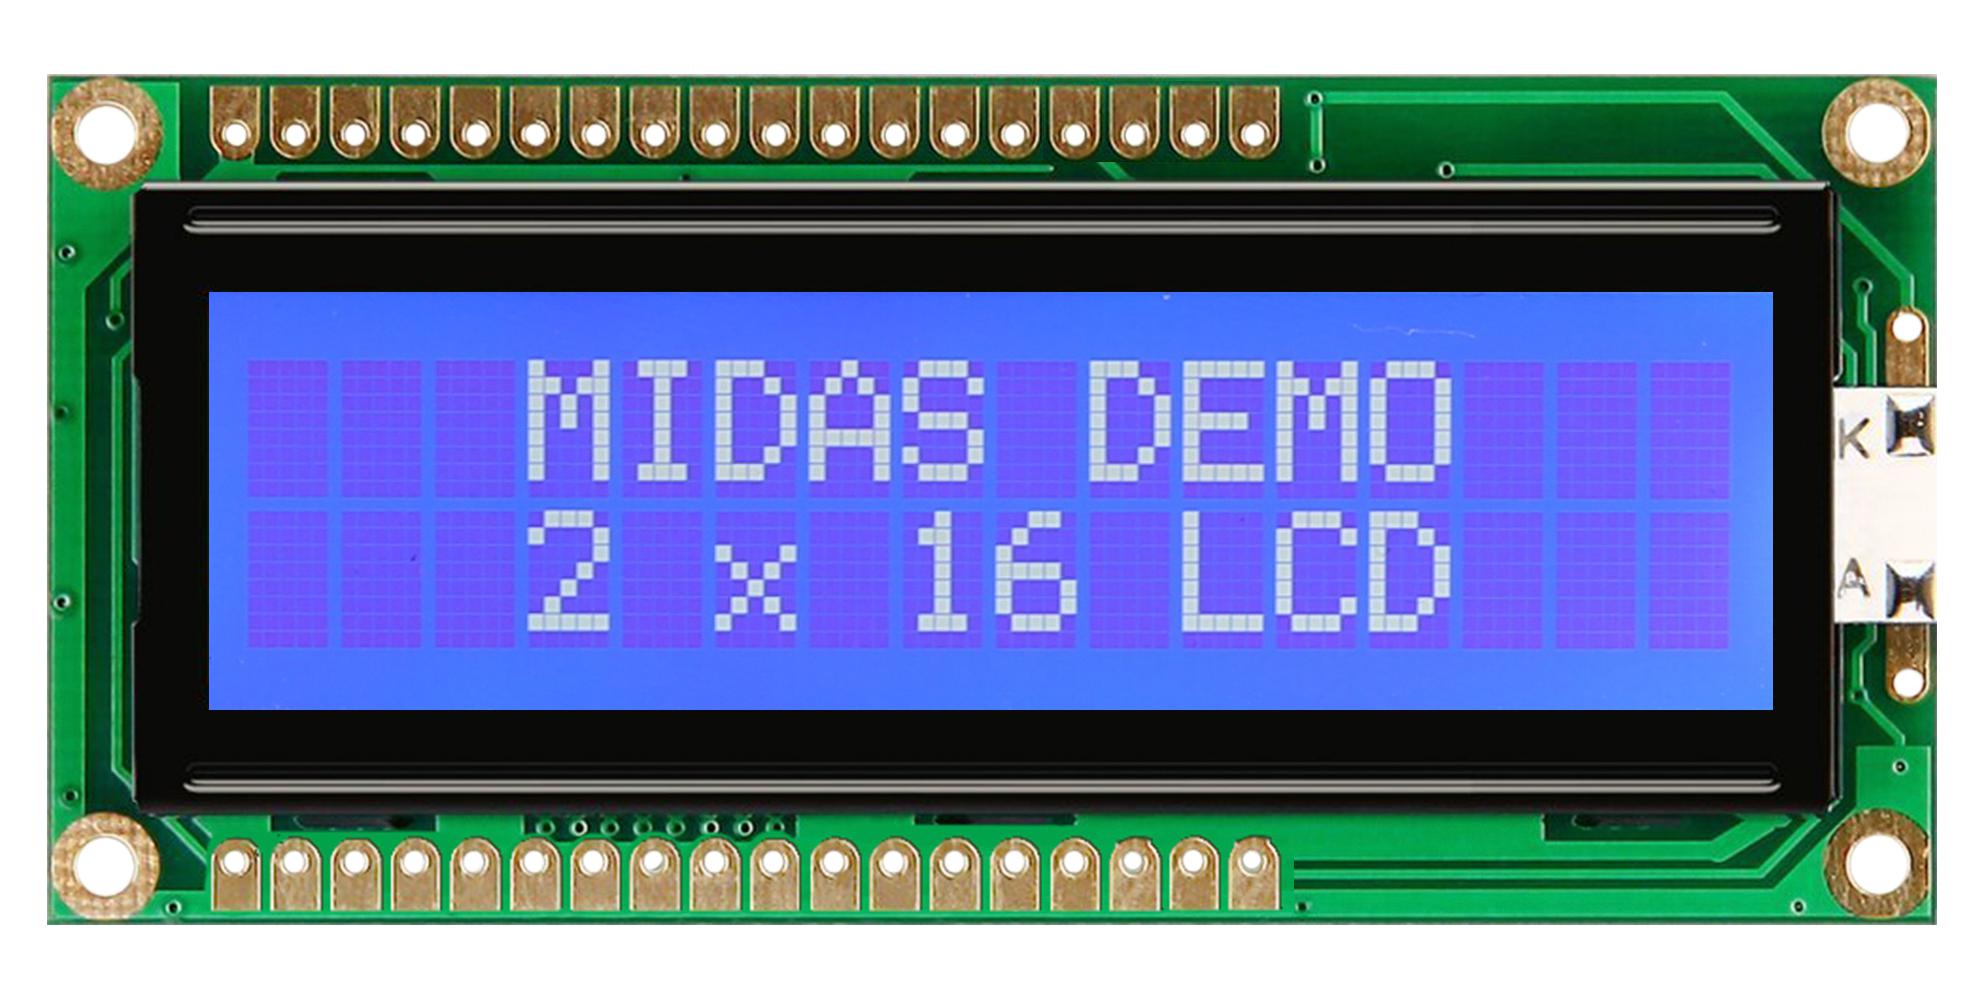 MC21605G6W-BNMLW3.3-V2 LCD DISPLAY, COB, 16 X 2, BLUE STN, 3.3V MIDAS